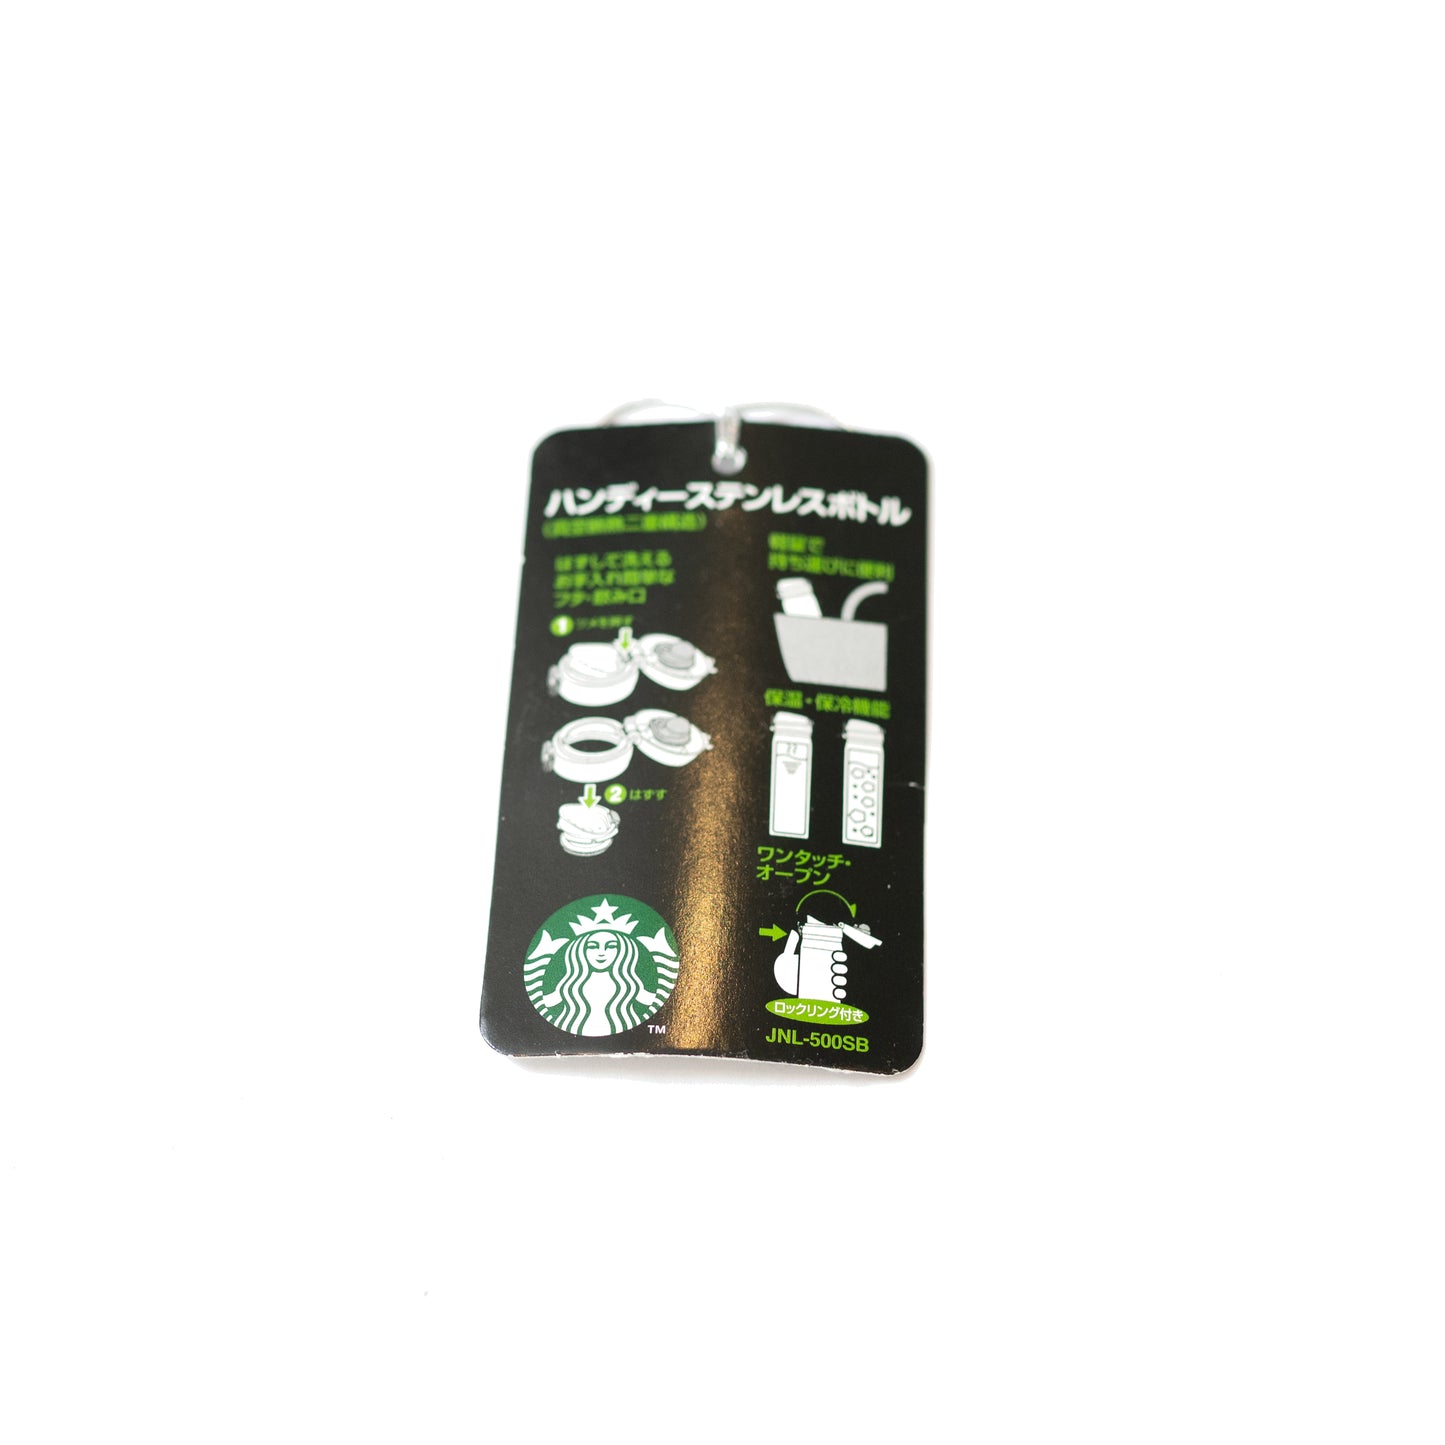 Fragment Design x Undercover x Starbucks Thermos (2015)